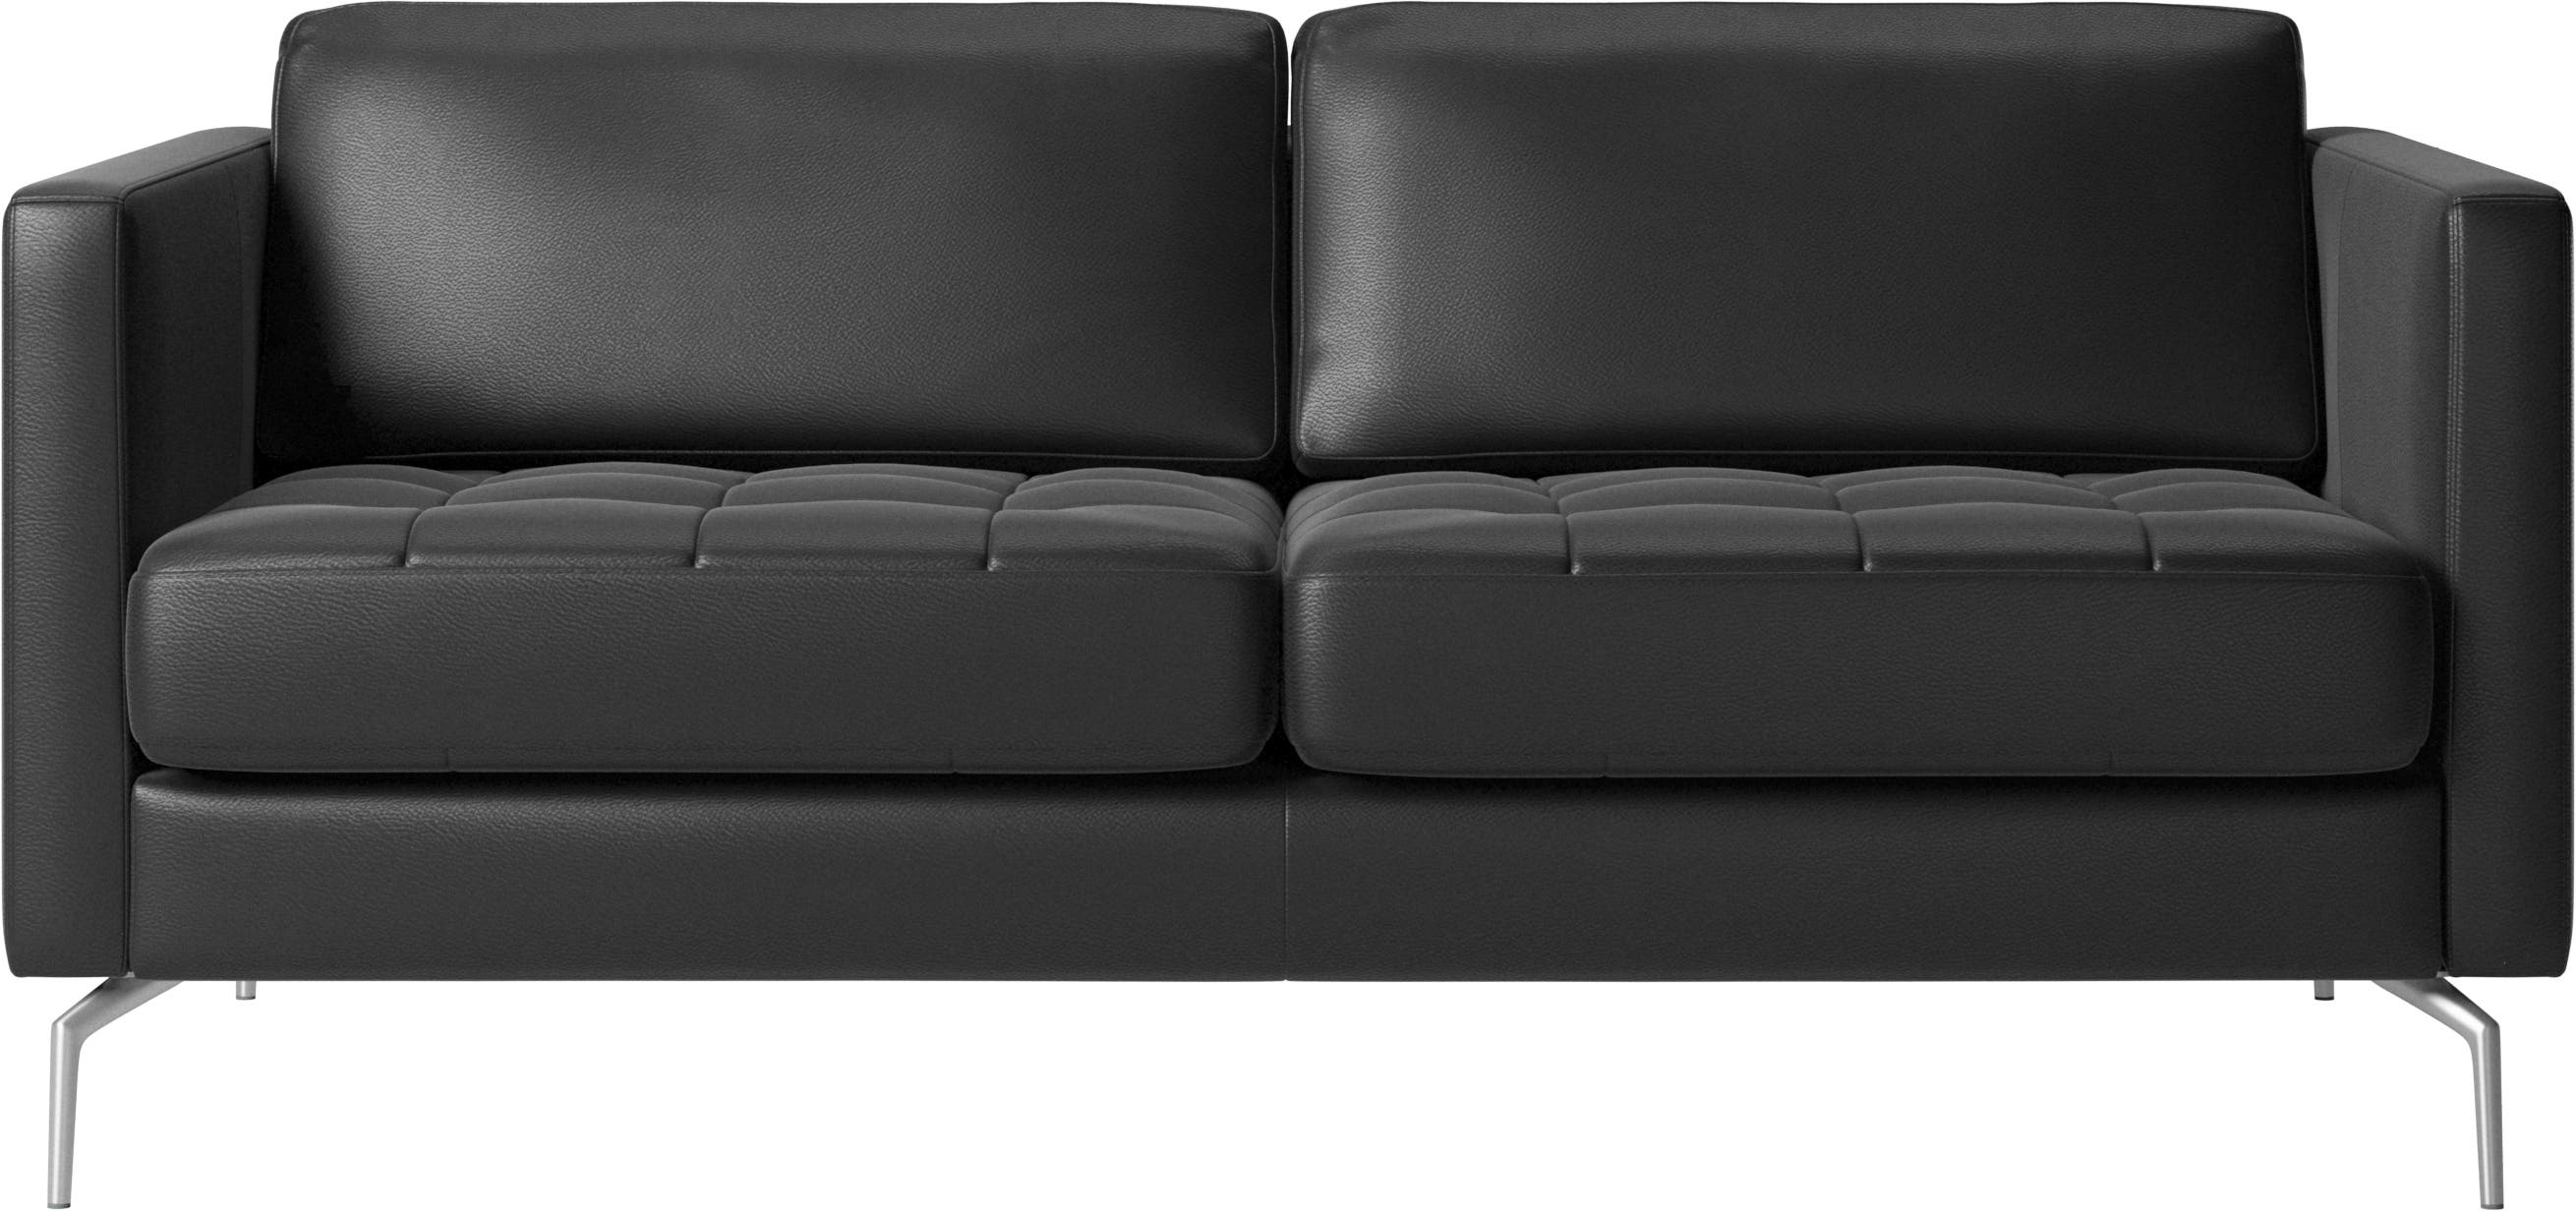 Sofa Osaka, pikowane siedzisko